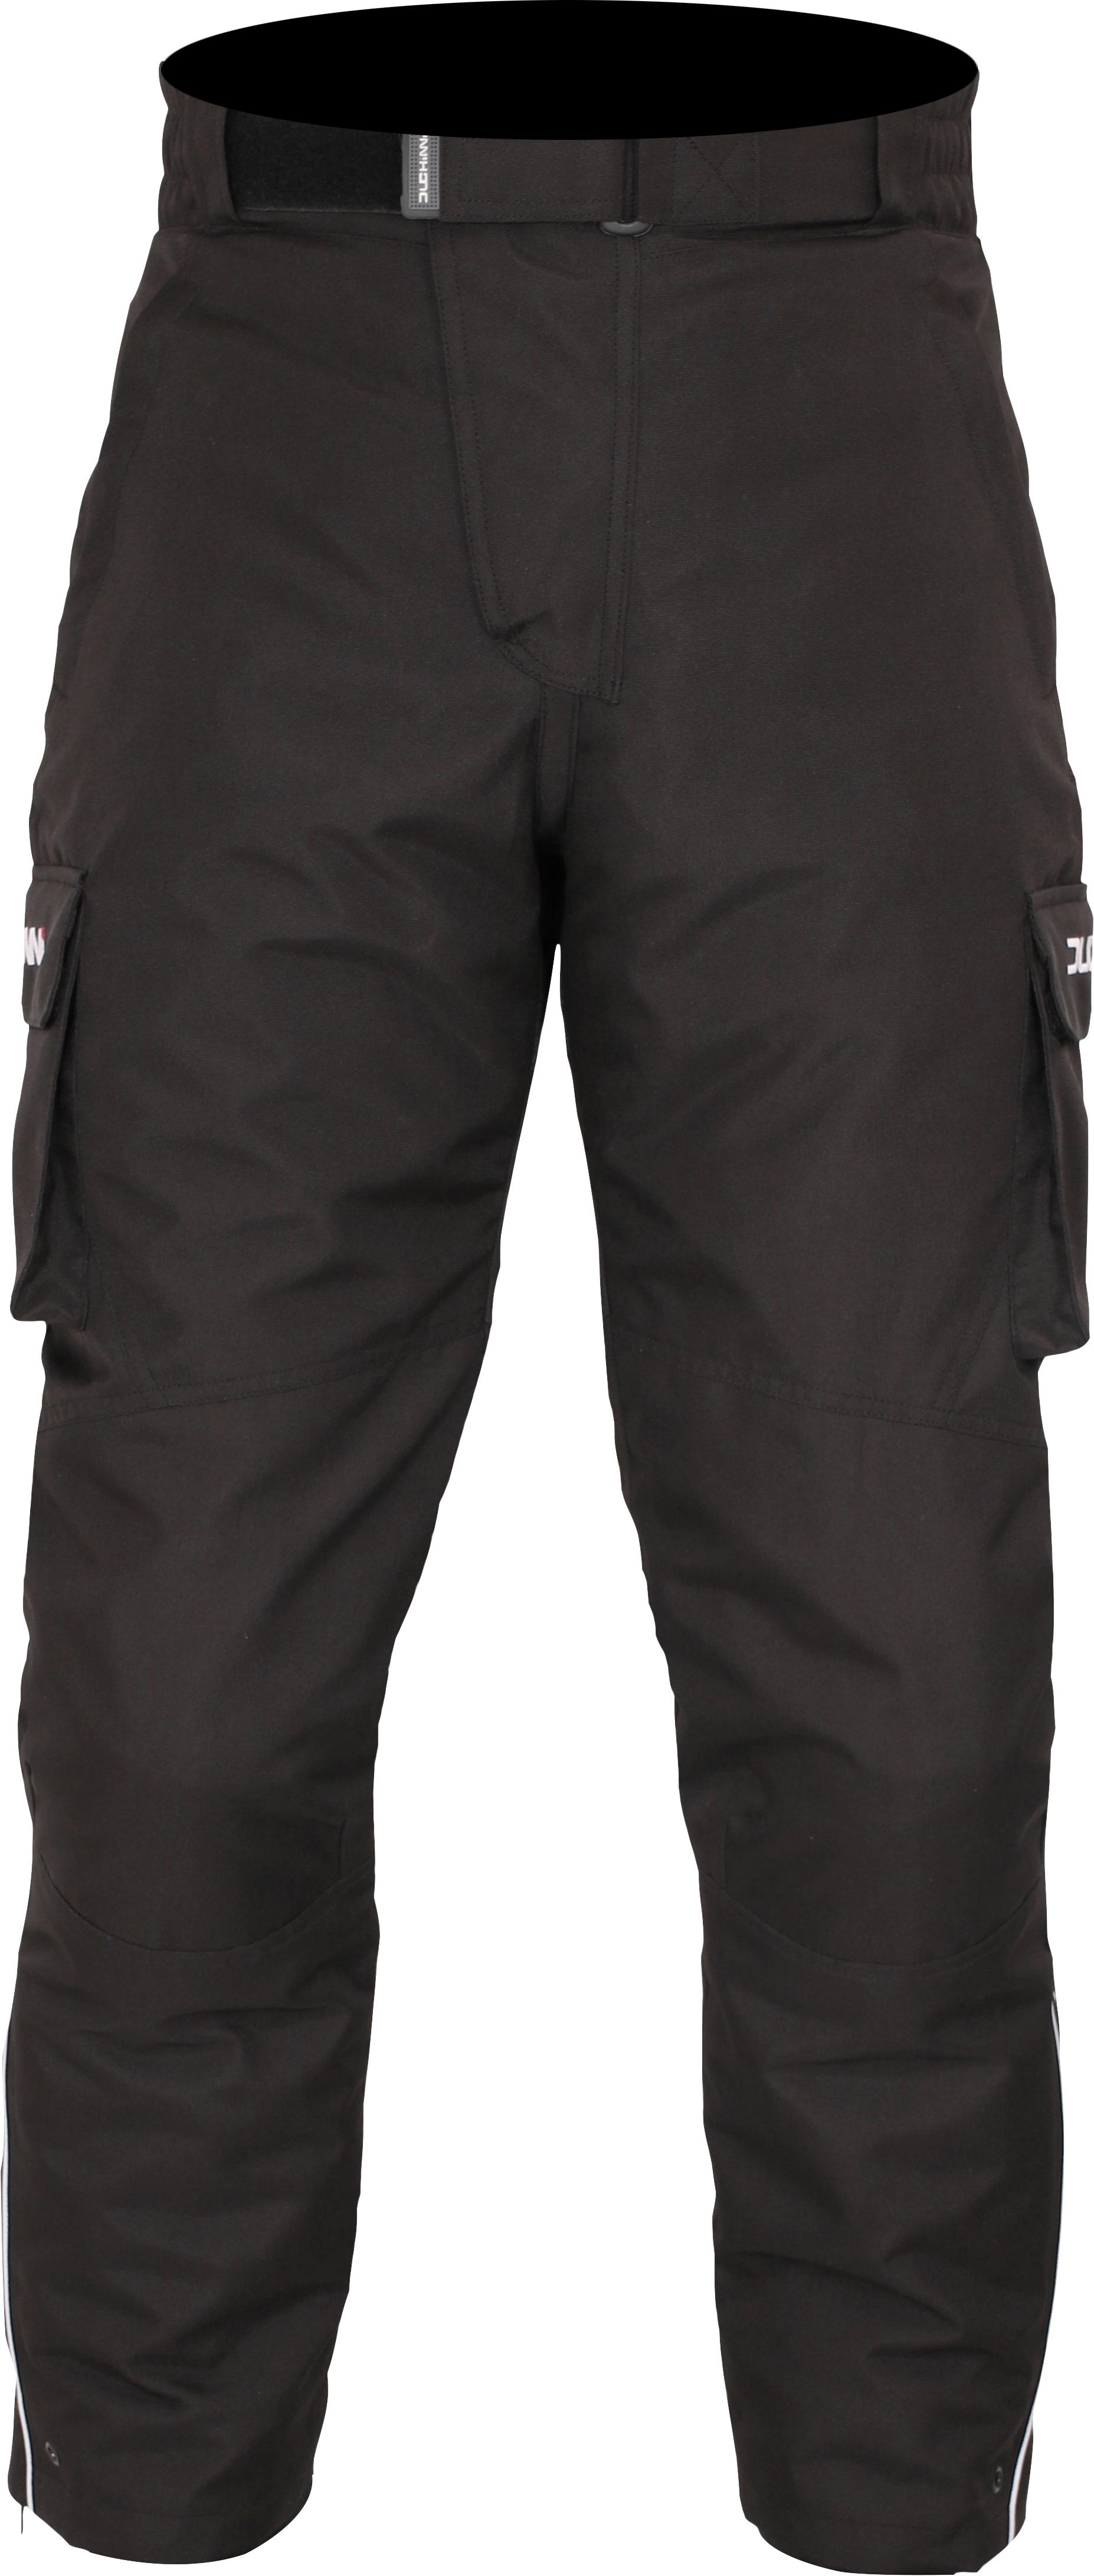 Duchinni Pacific Motorcycle Short Jeans - Black, L